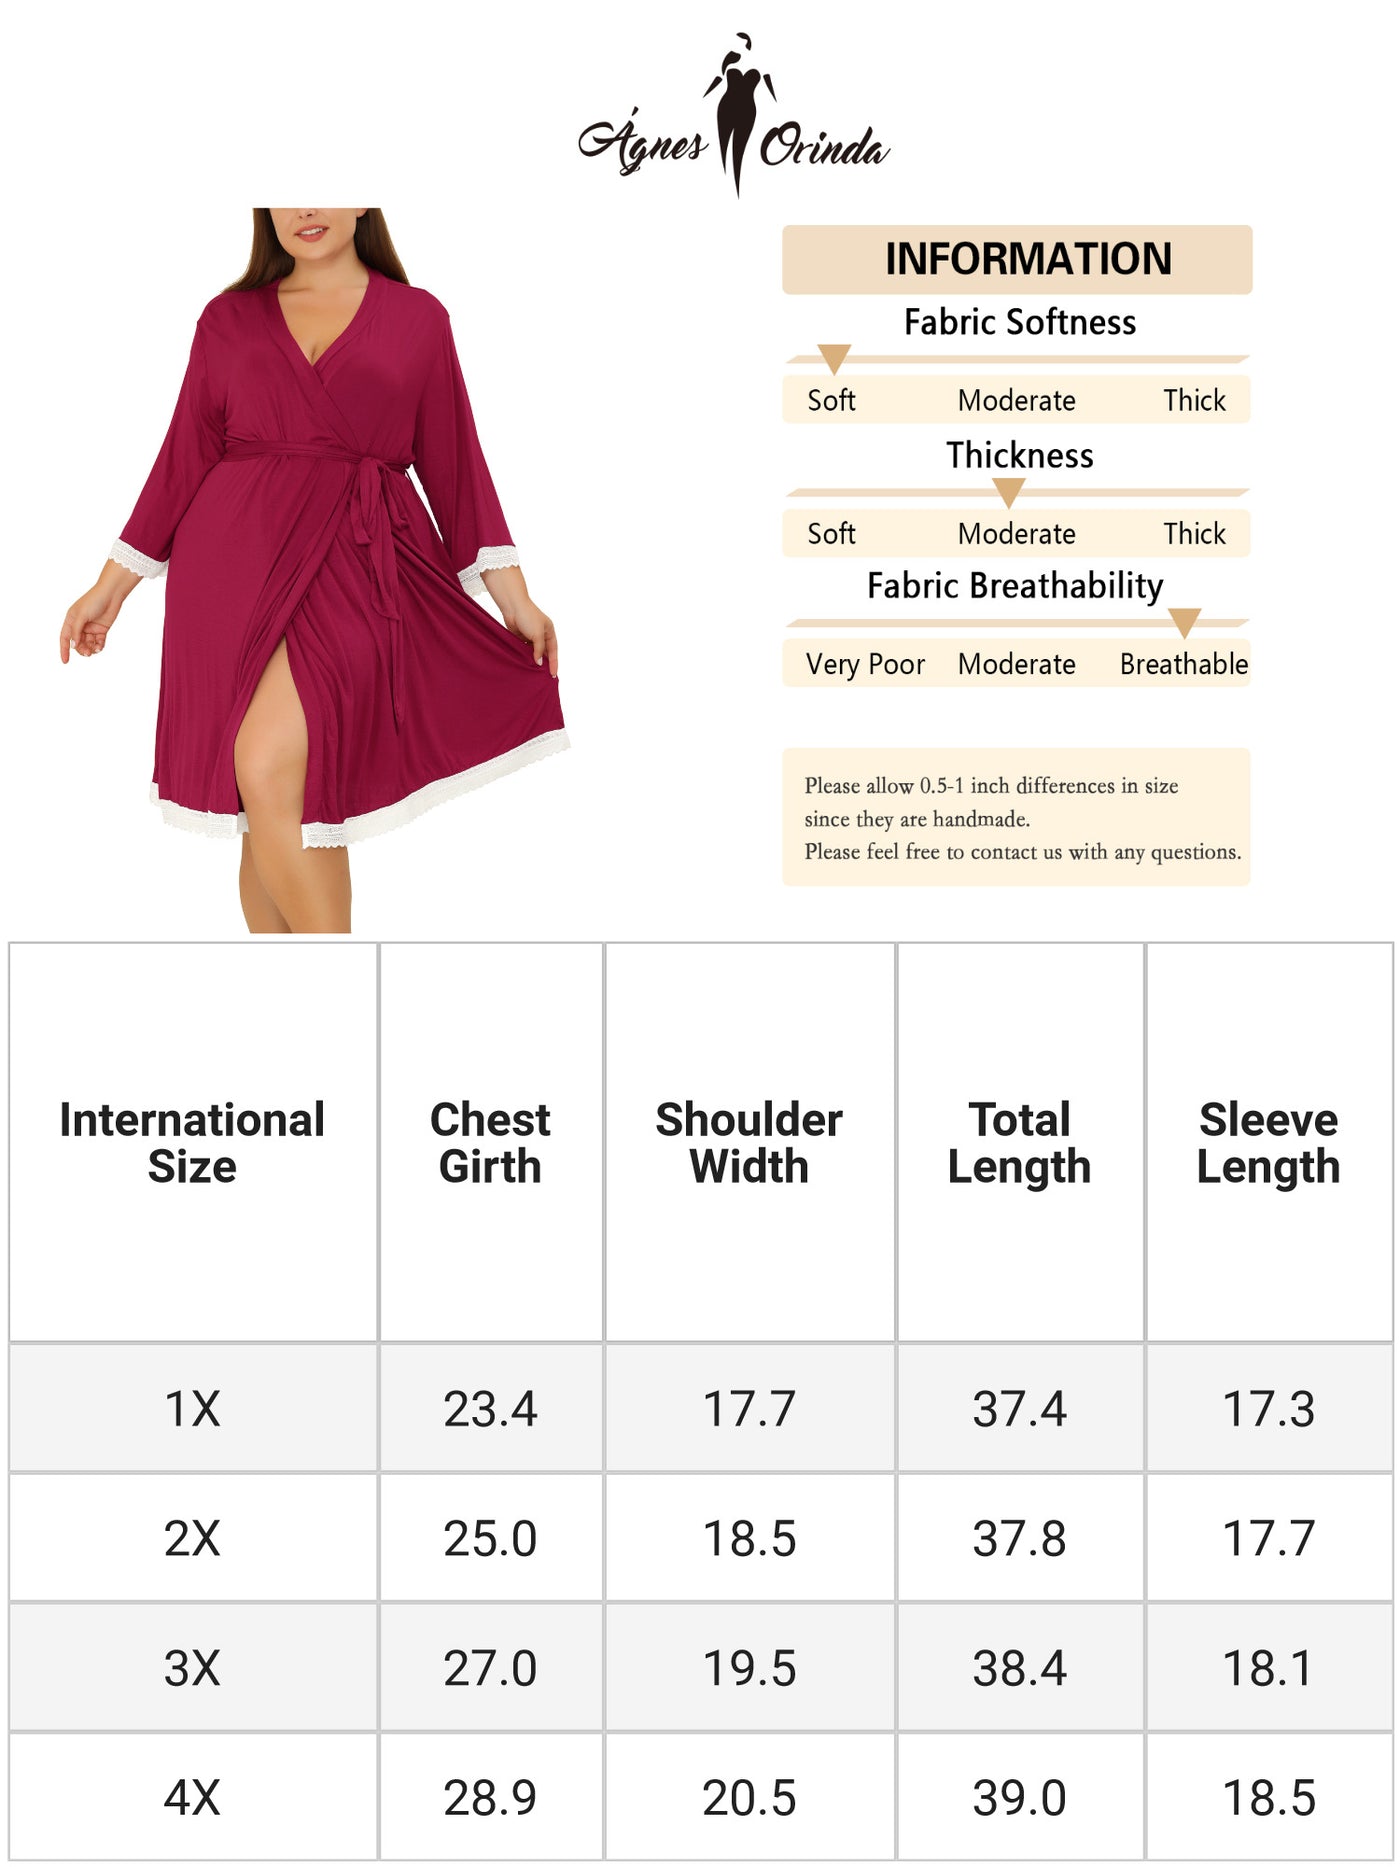 Bublédon Women's Plus Size Nightgown Wrap Bathrobe Tie Belt Lace Trim 3/4 Sleeve Pajama